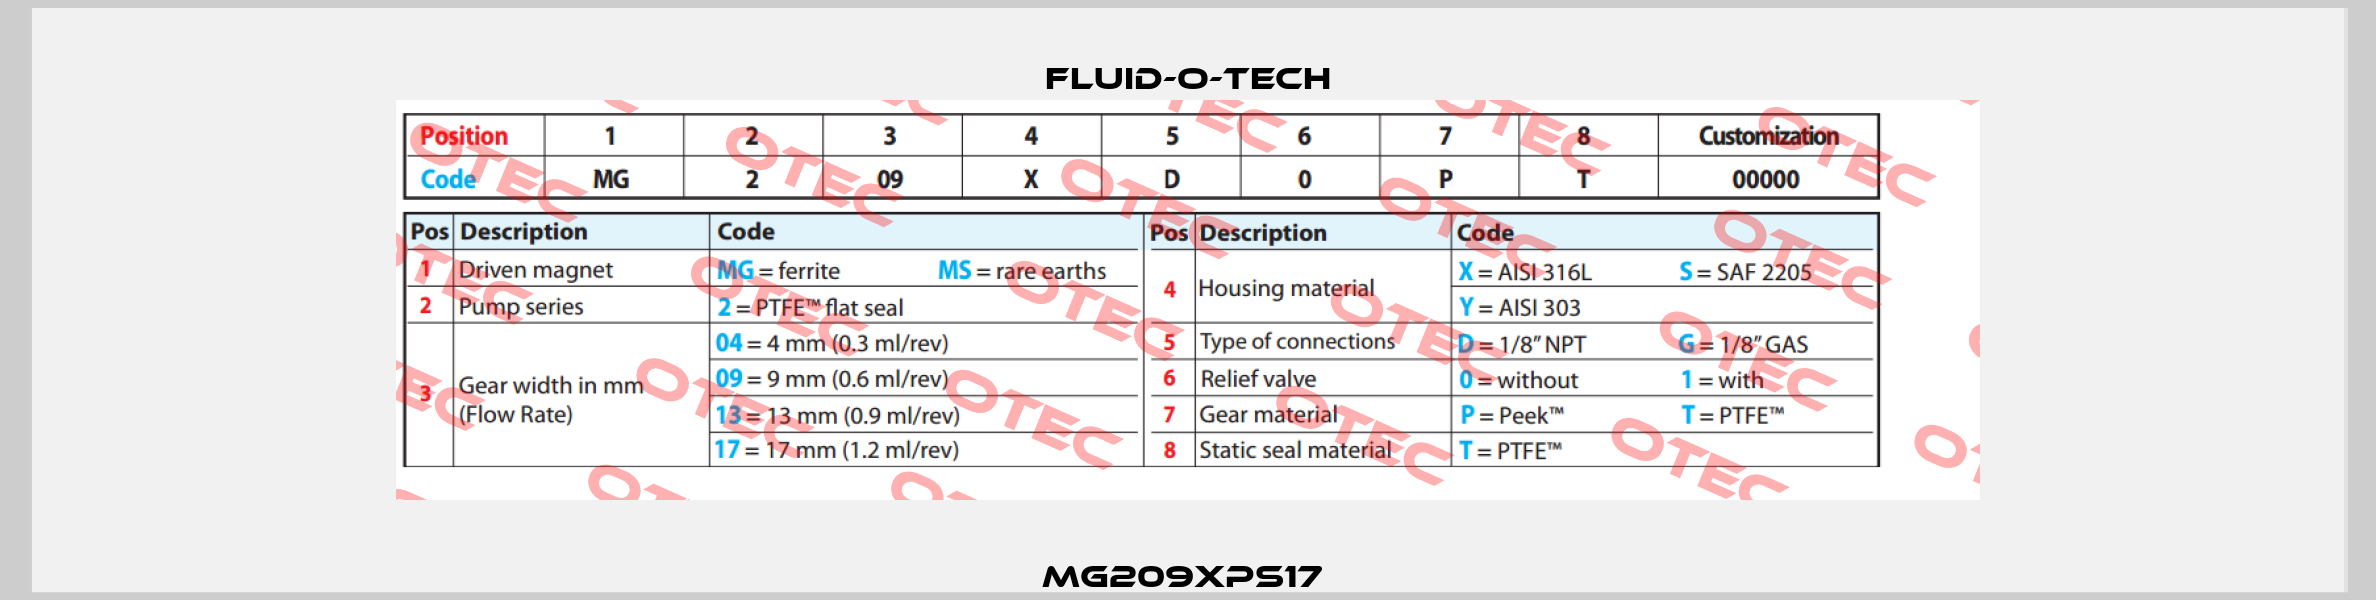 MG209XPS17  Fluid-O-Tech